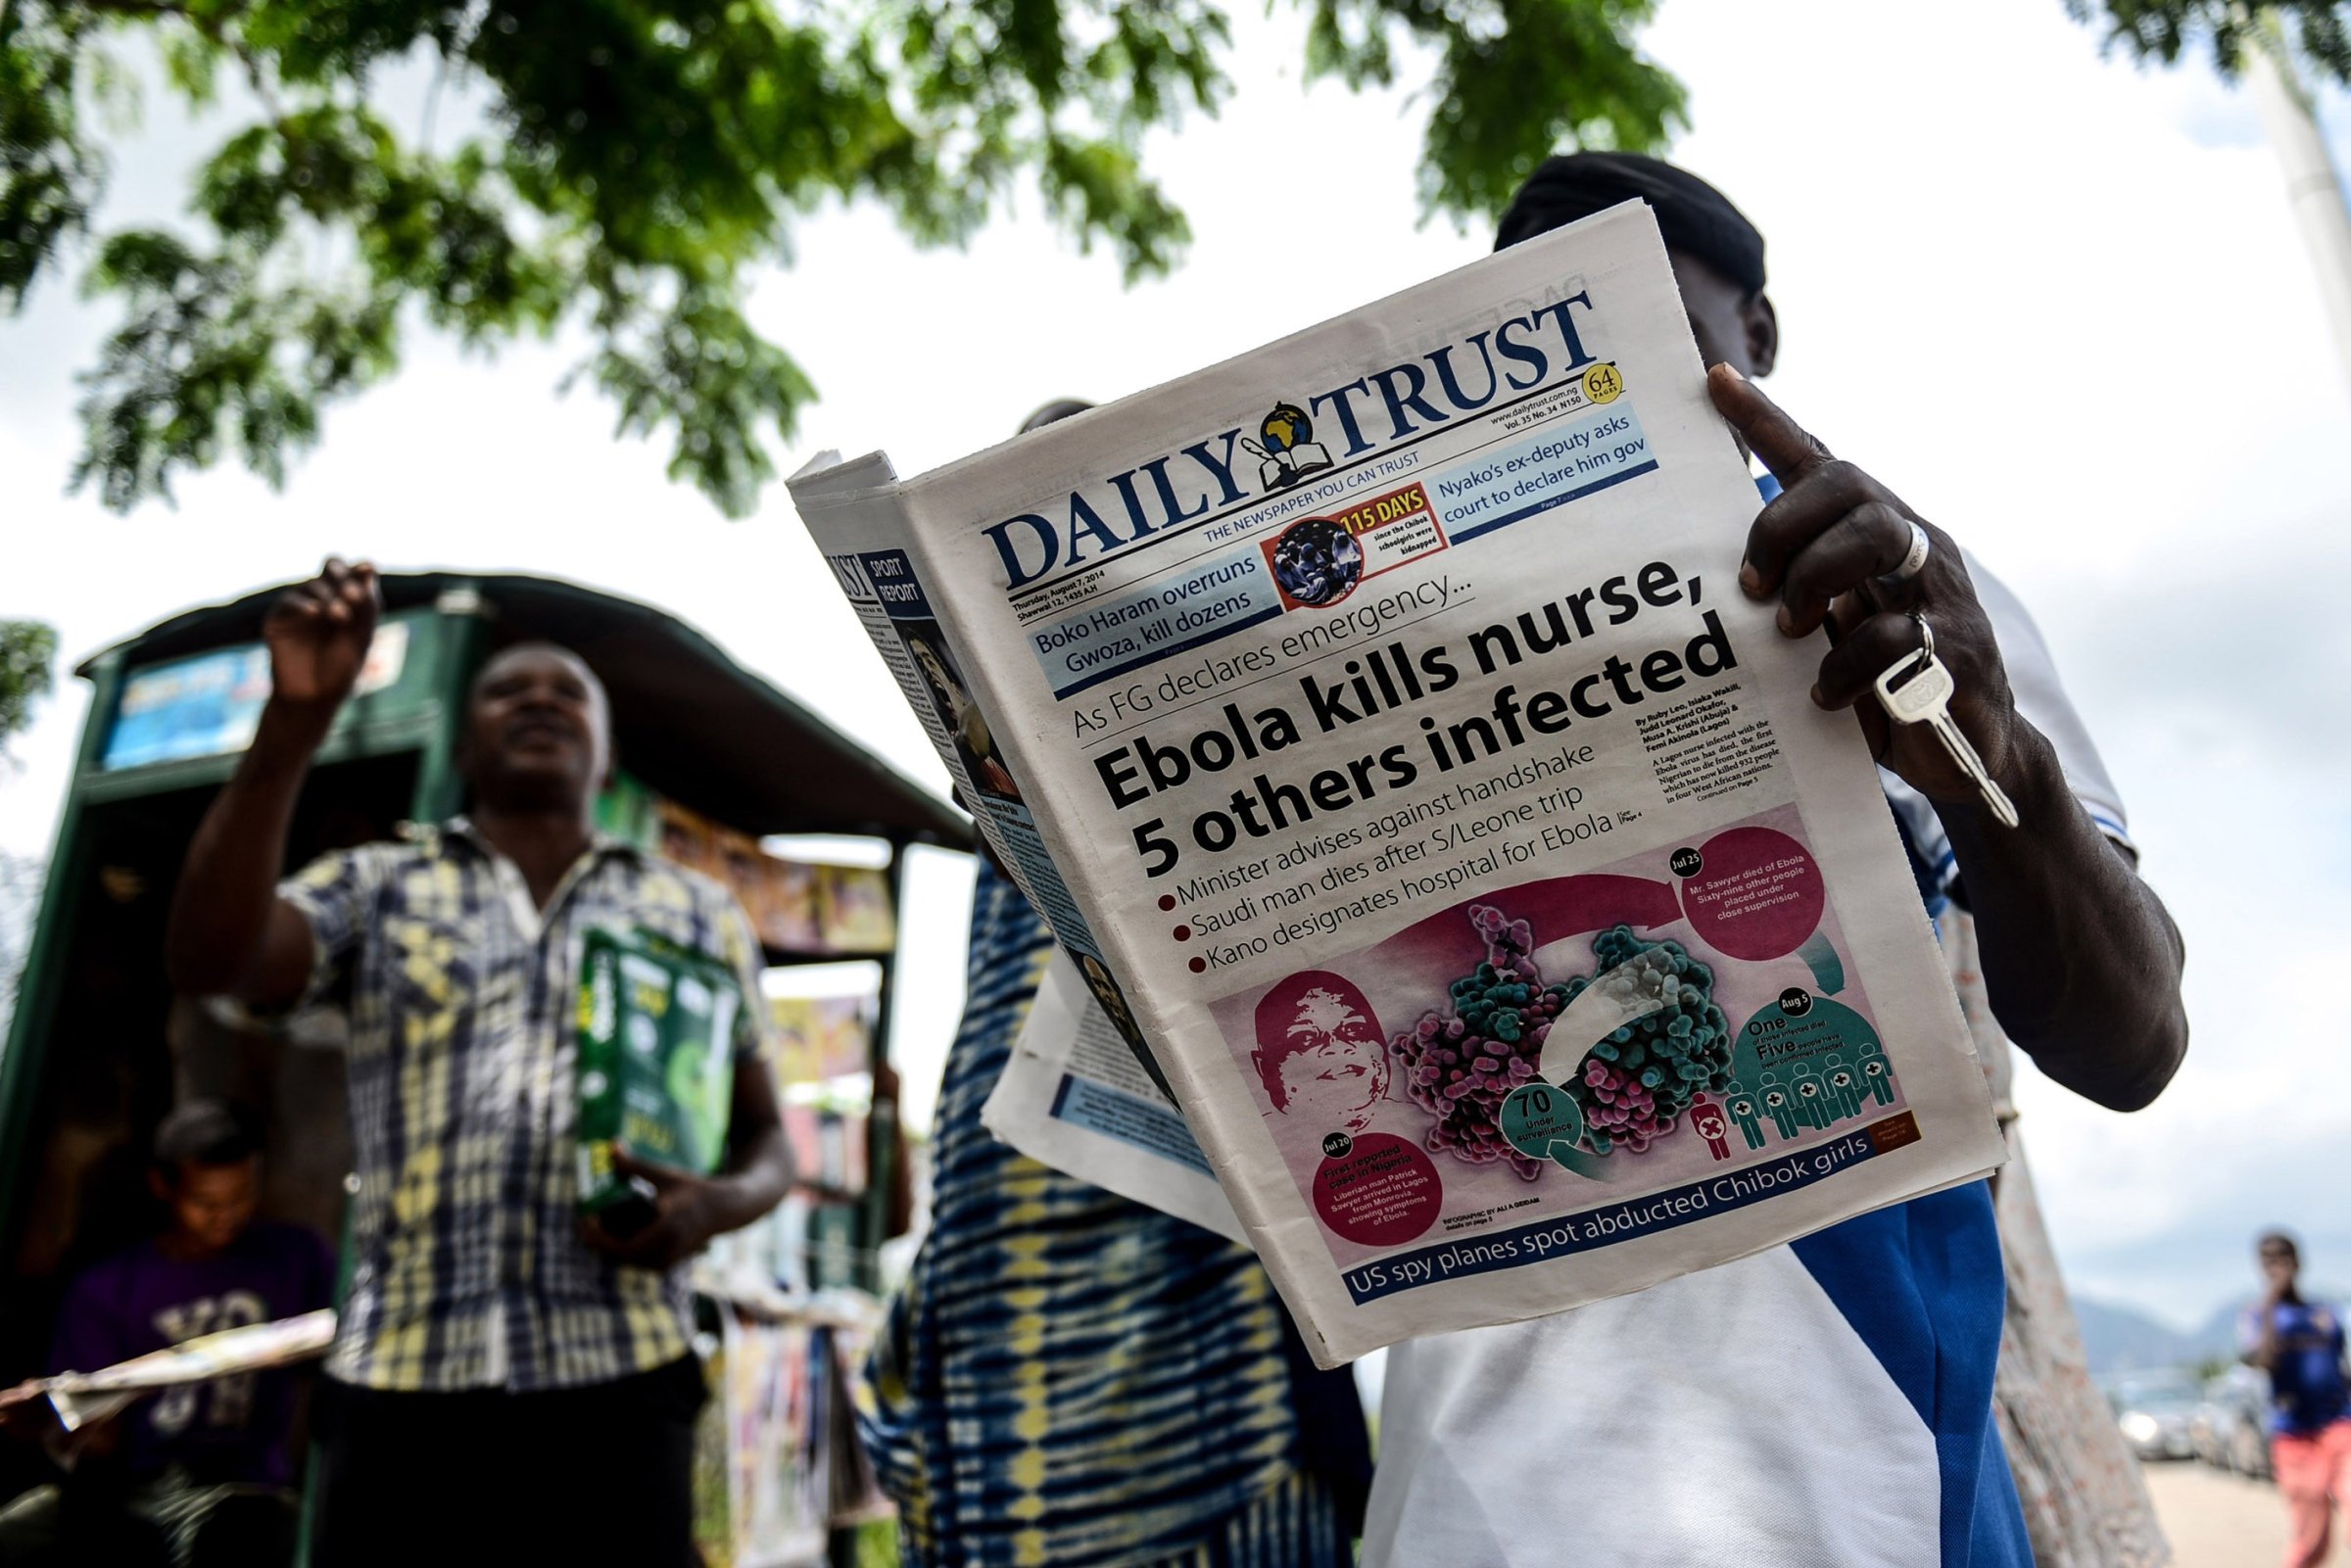 Ebola in Nigeria's main agenda